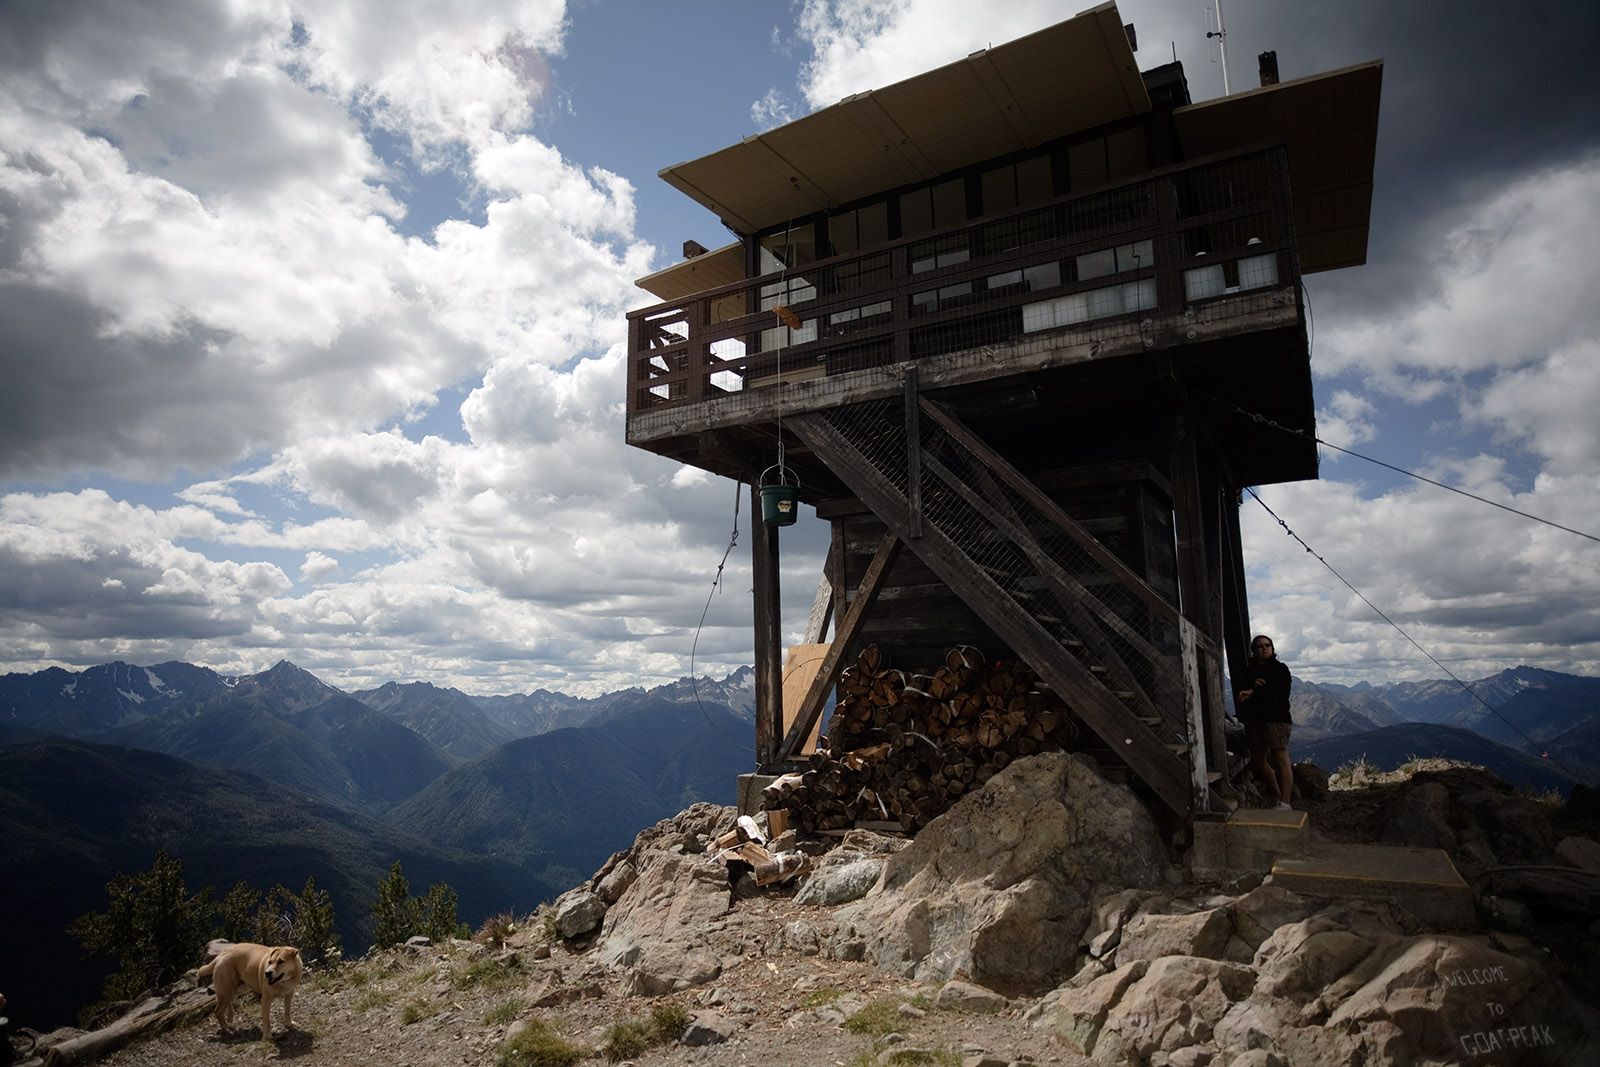 Goat_Peak_lookout_tower